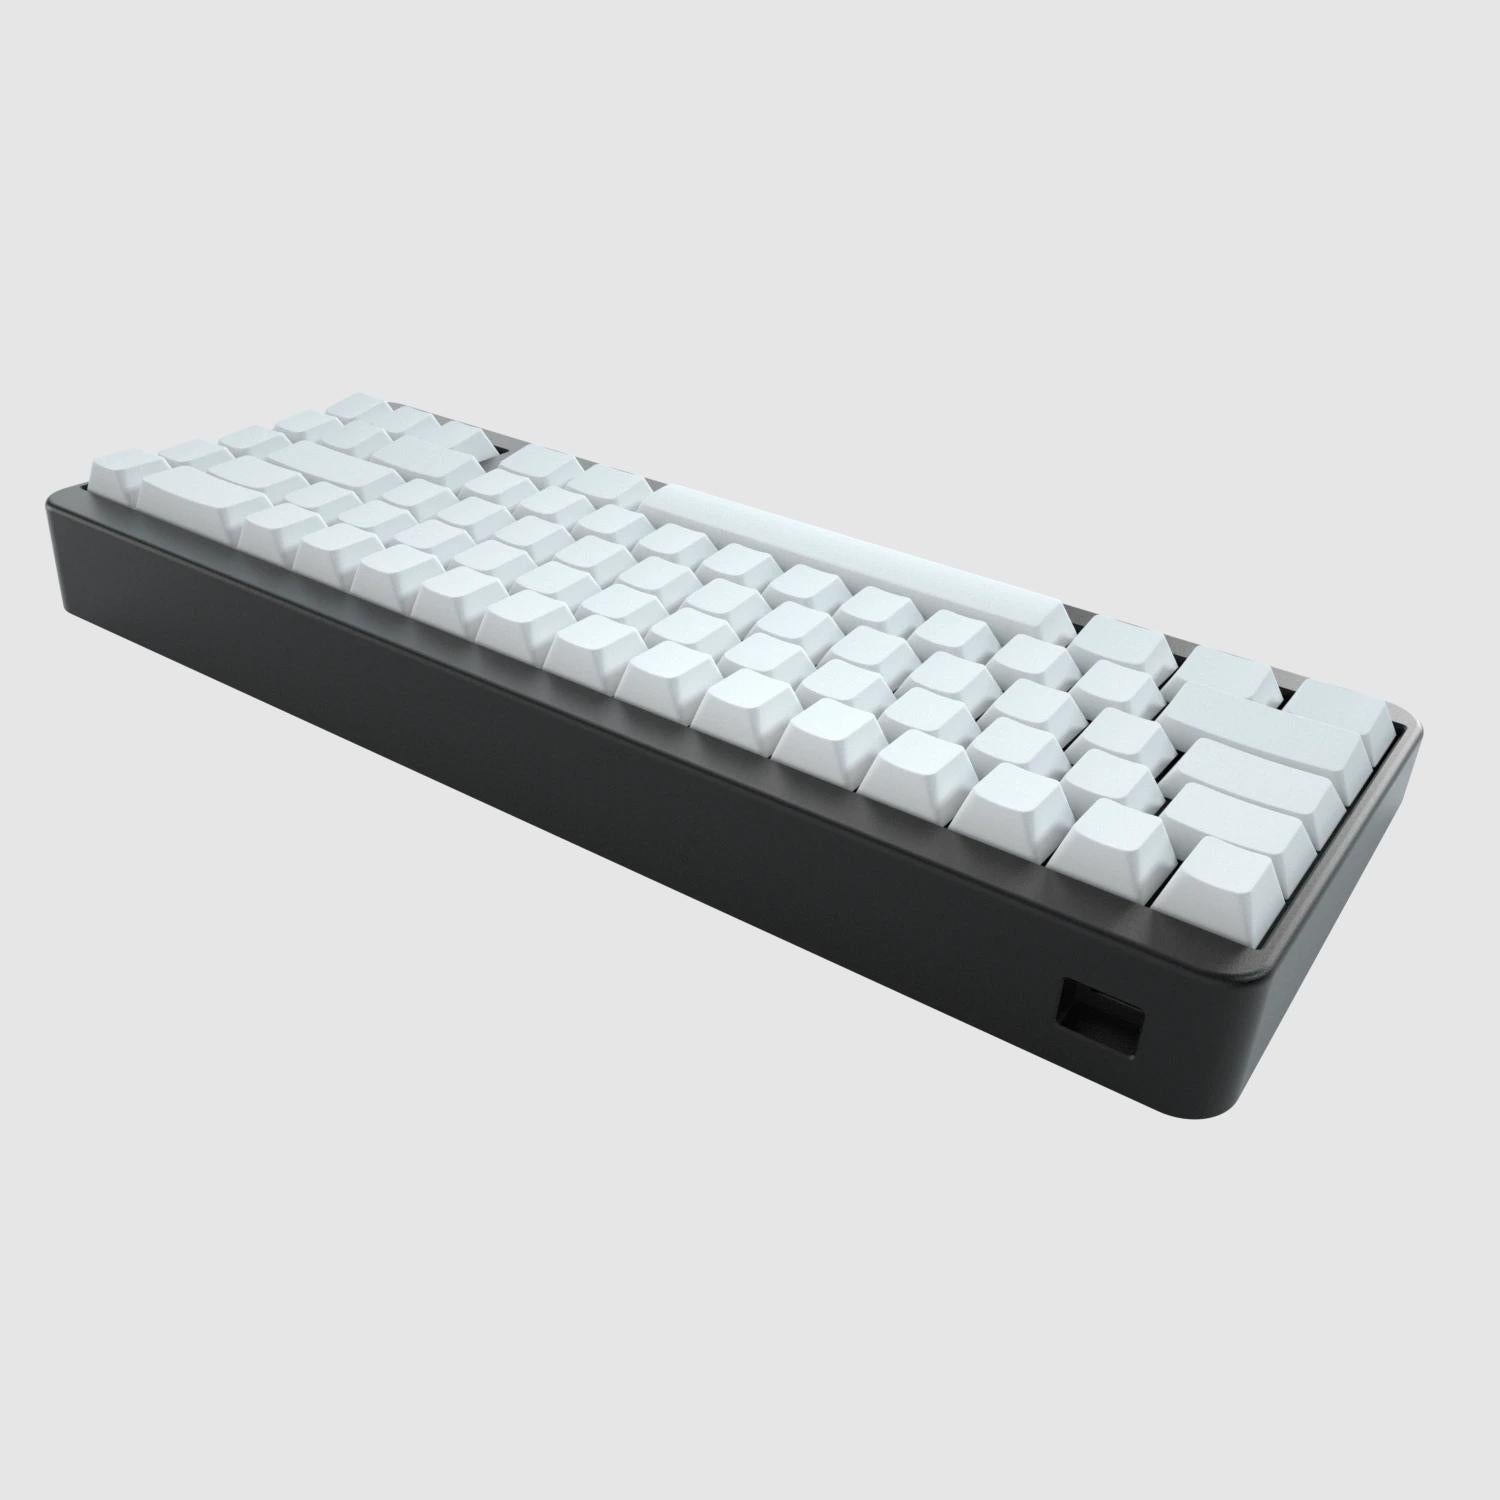 ID67 V1 Aluminium Mechanical Keyboard Kit